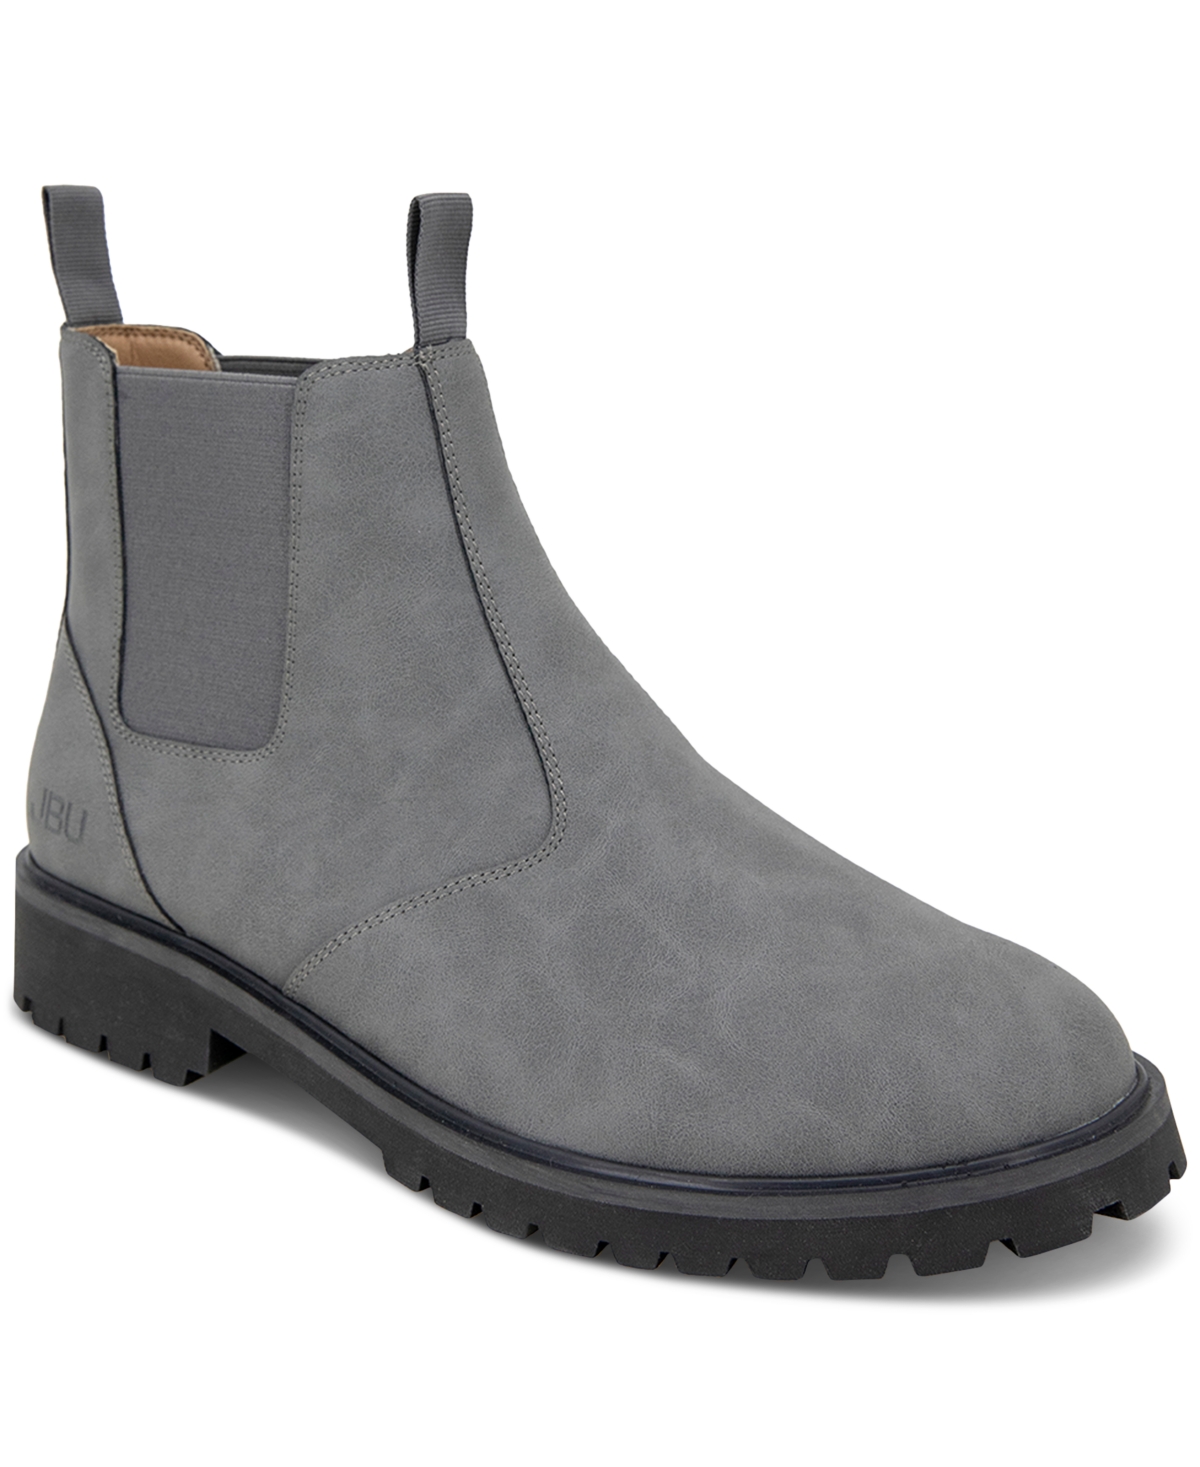 Men's Kai Slip & Water-Resistant Chelsea Boot - Grey